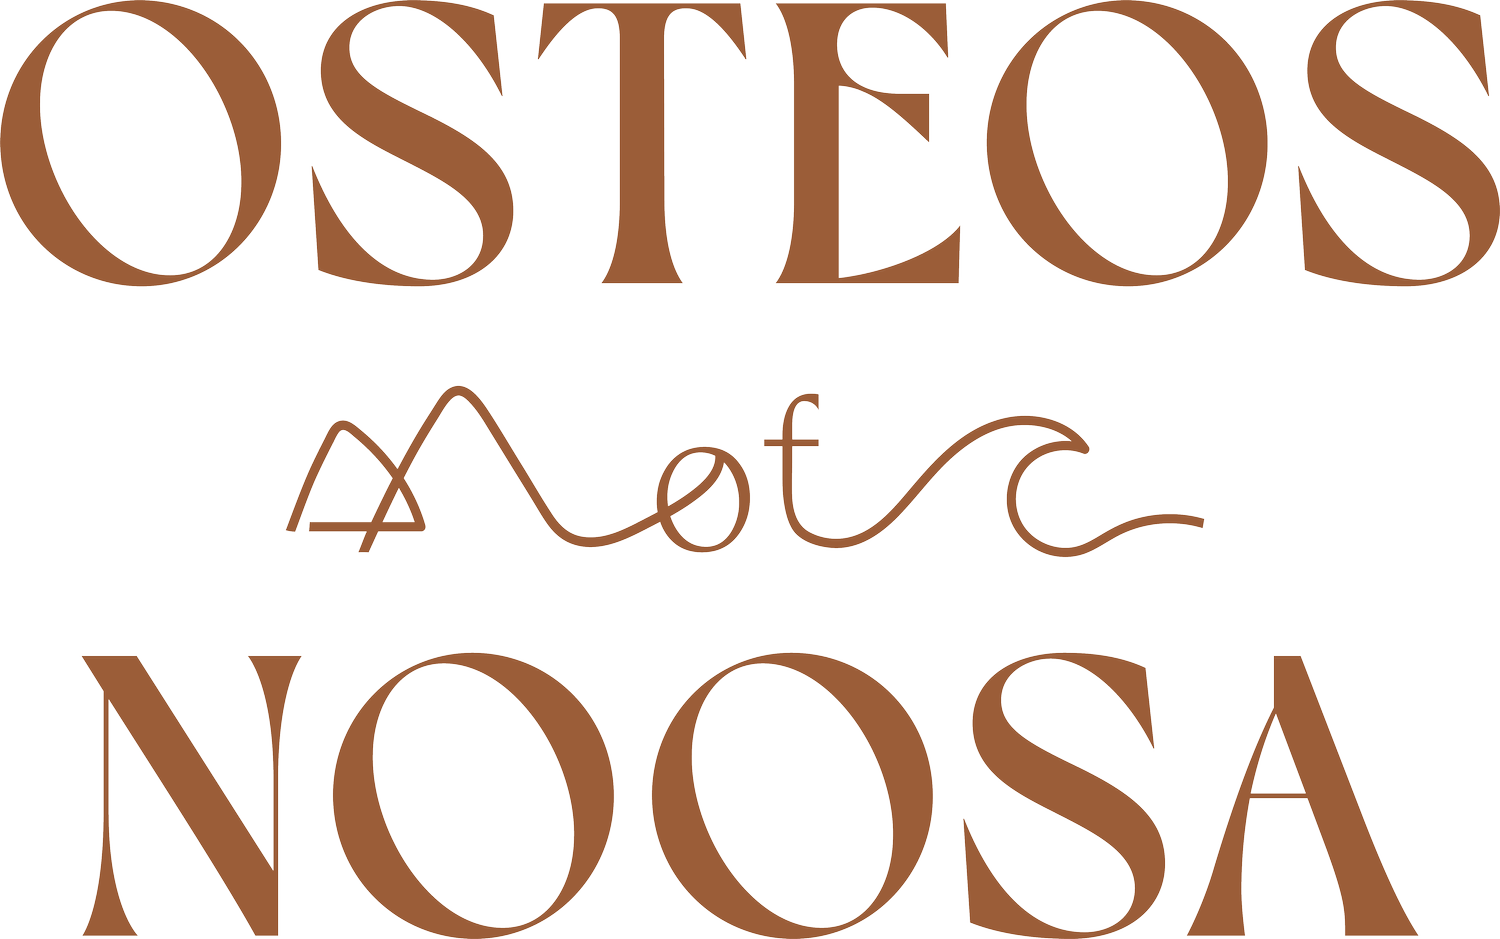 Osteos of Noosa